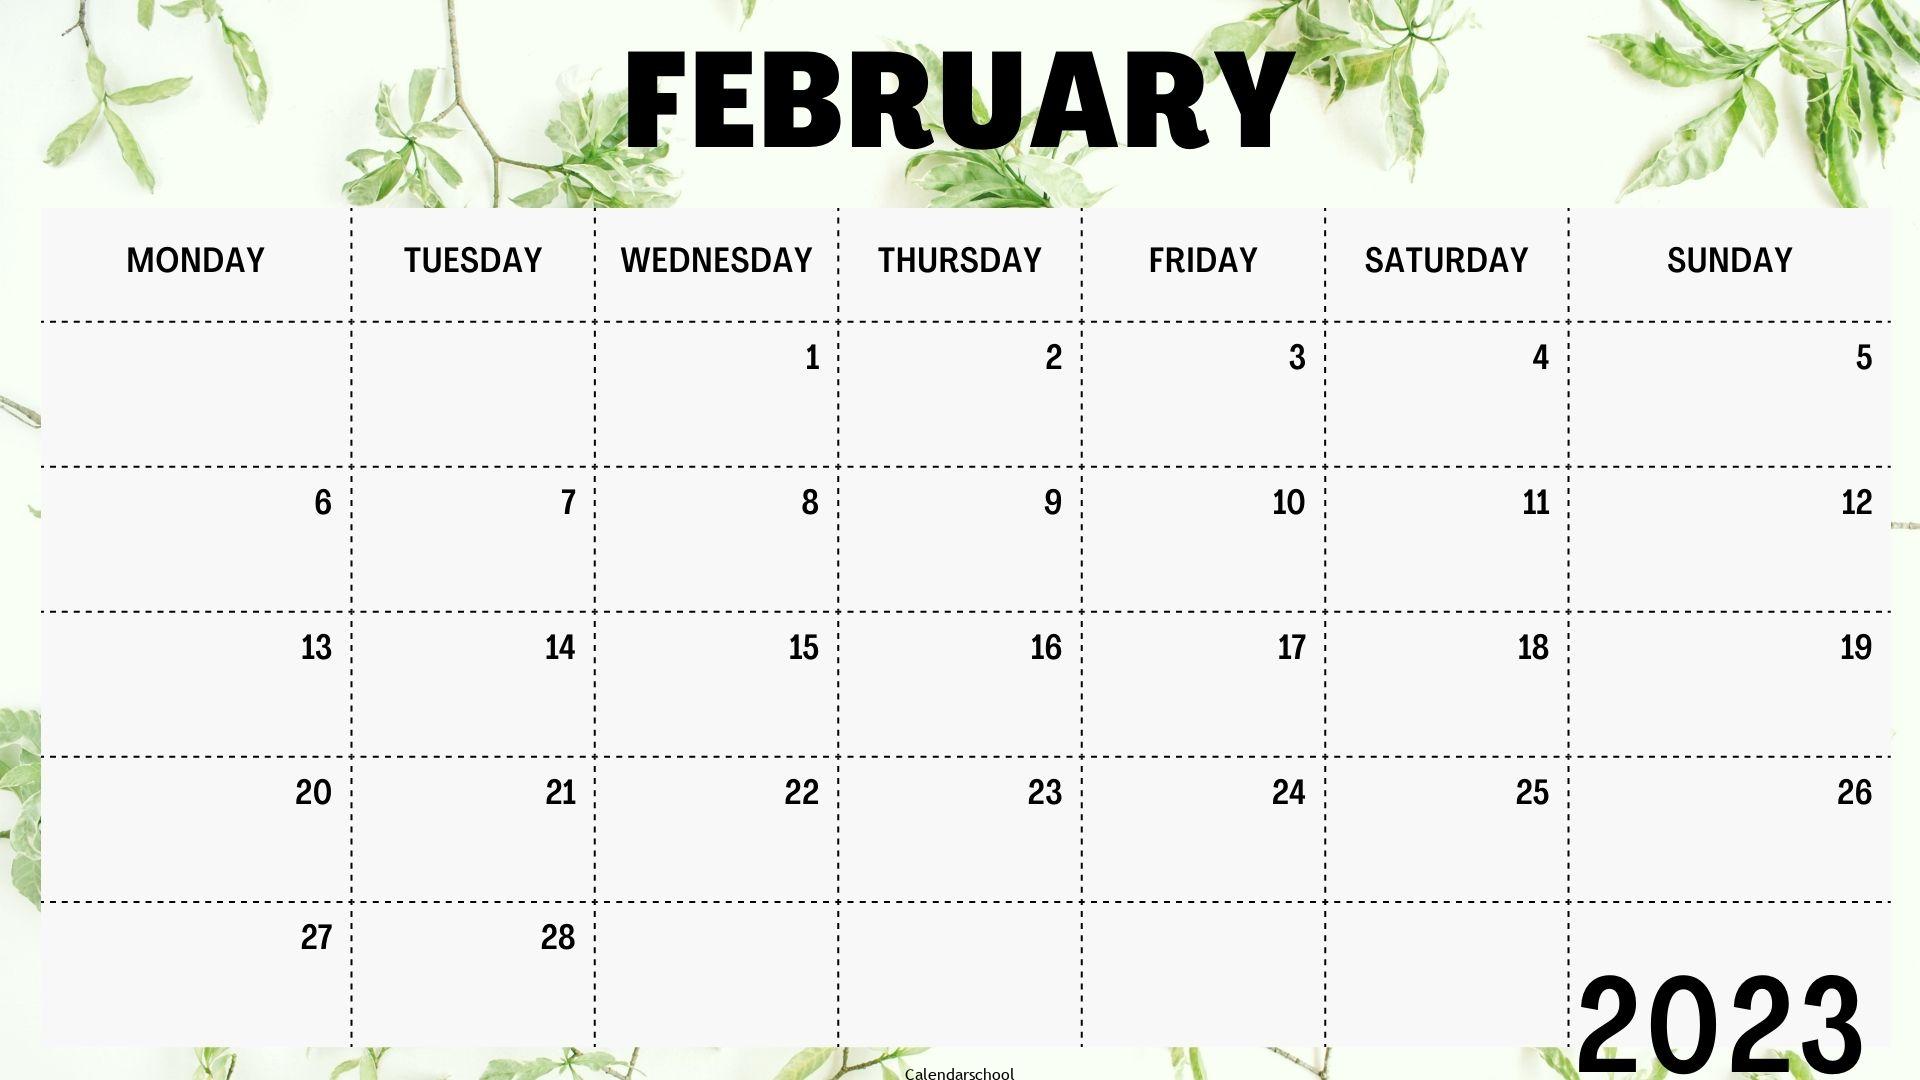 2023 February Calendar in Spanish